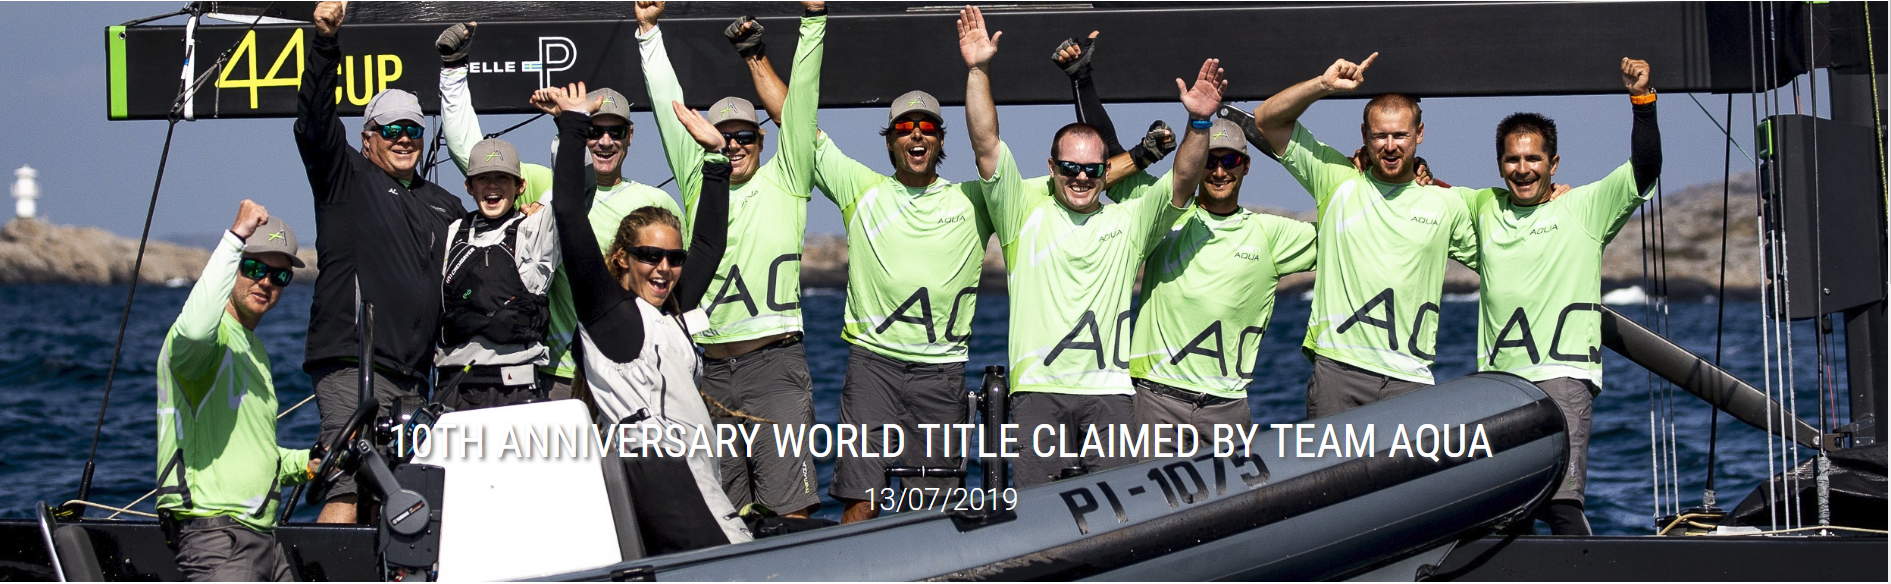 10th anniversary World title claimed by Team Aqua